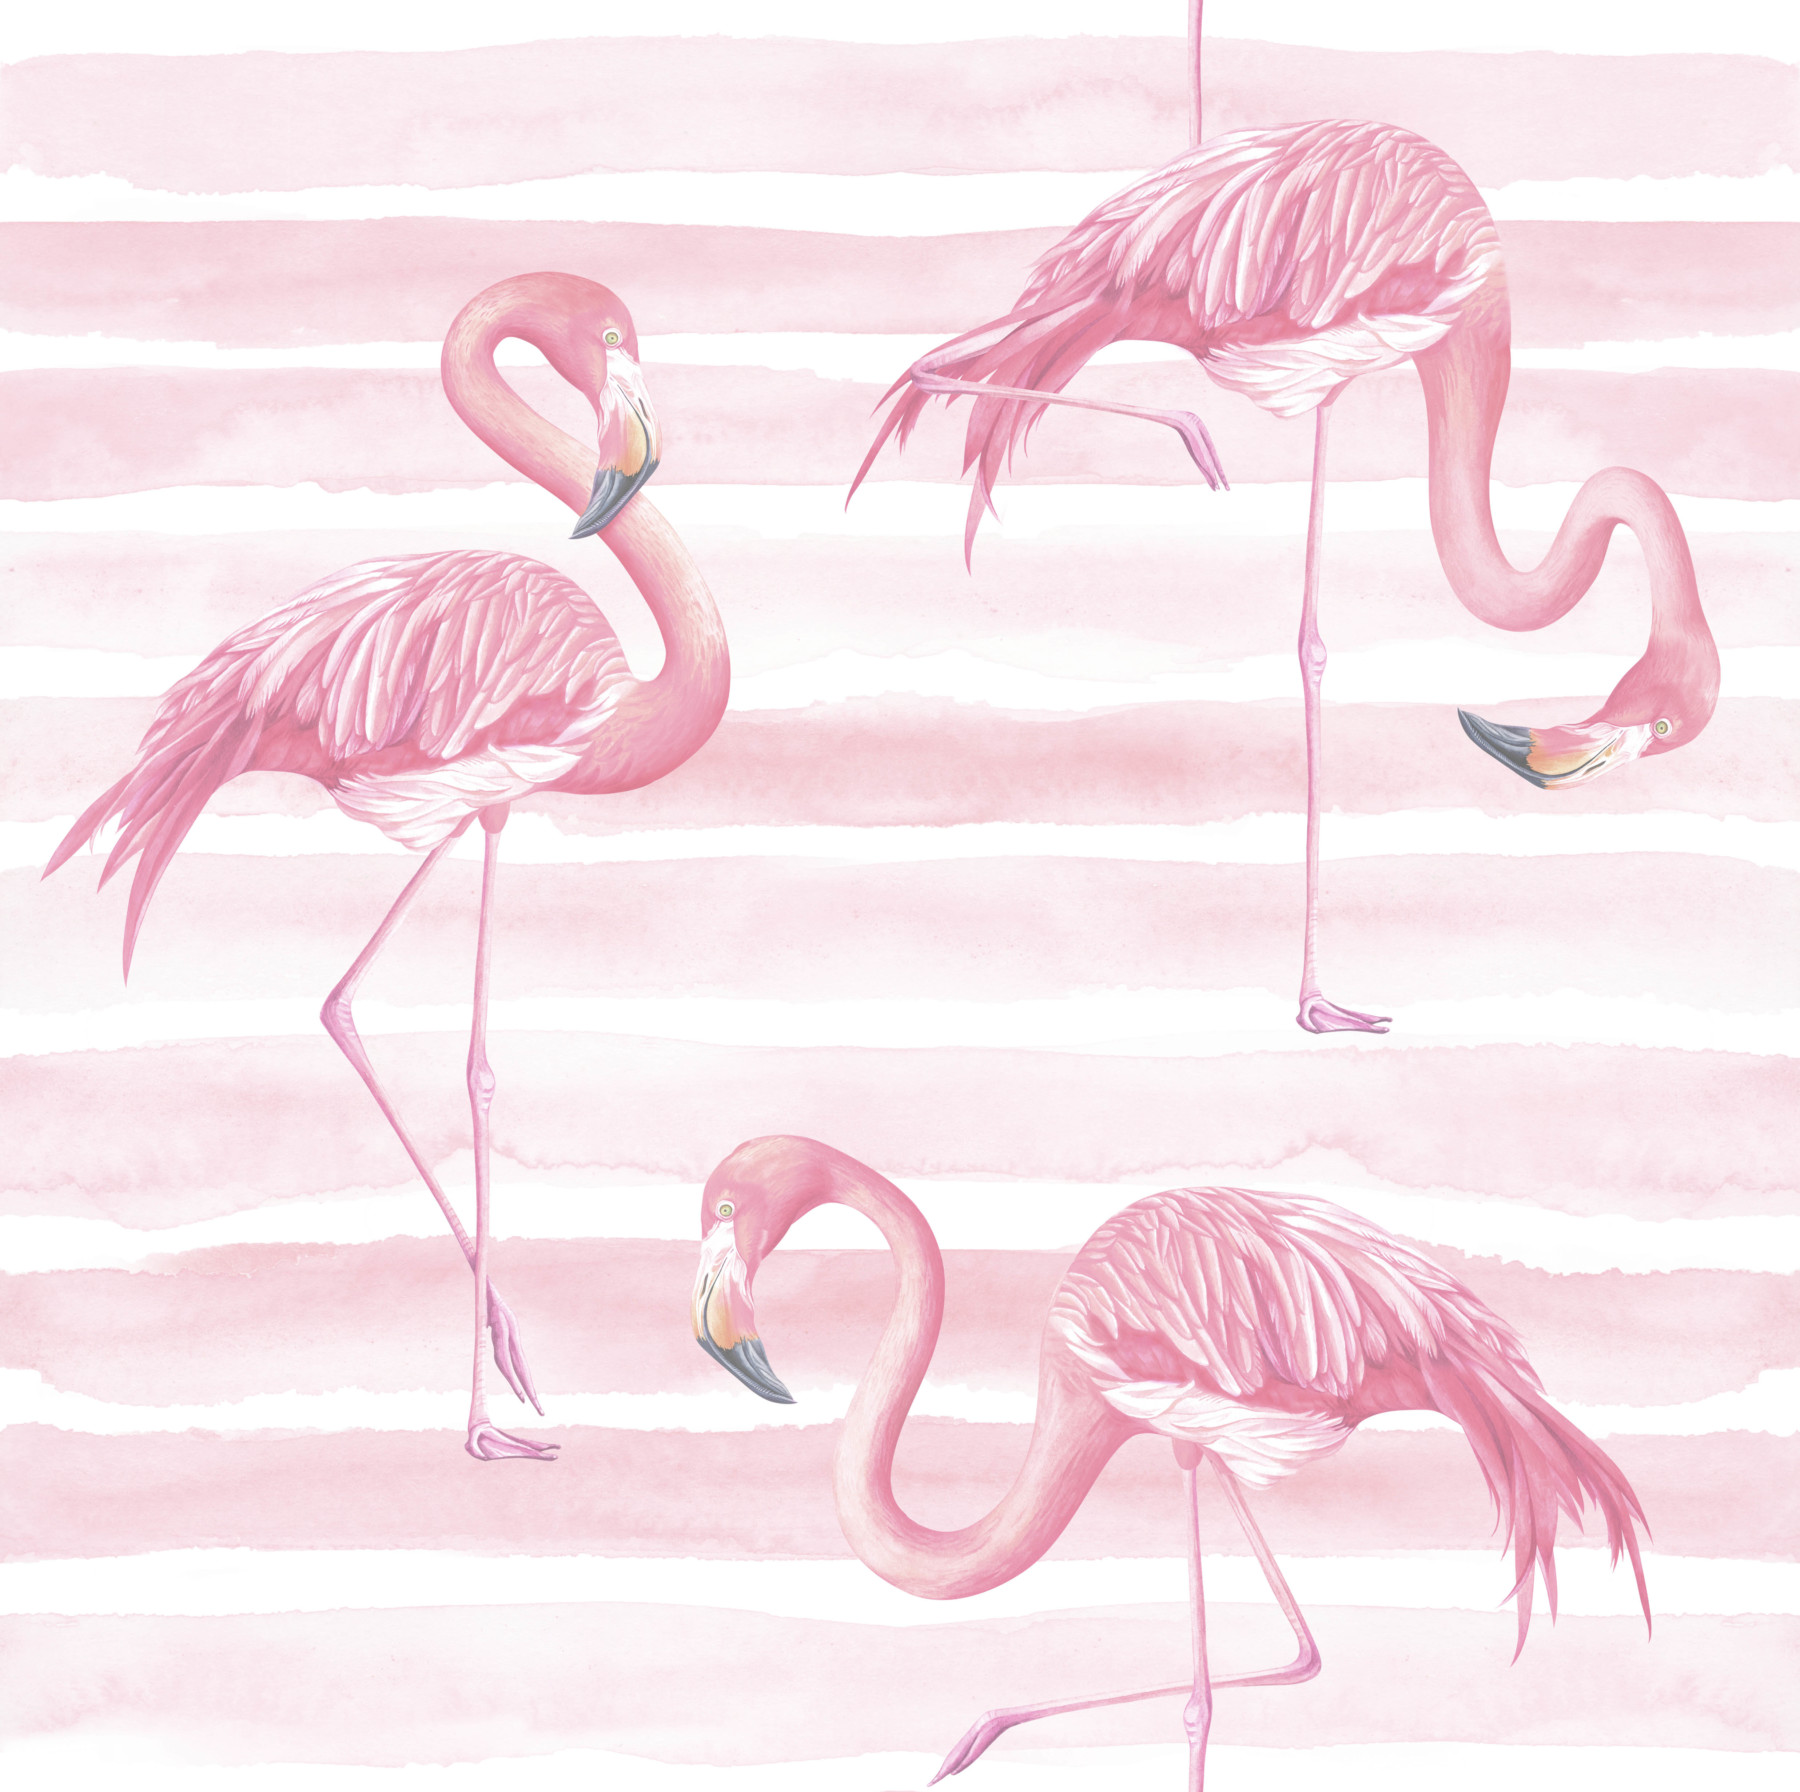 Flamingos Wallpaper | Grafico Melbourne